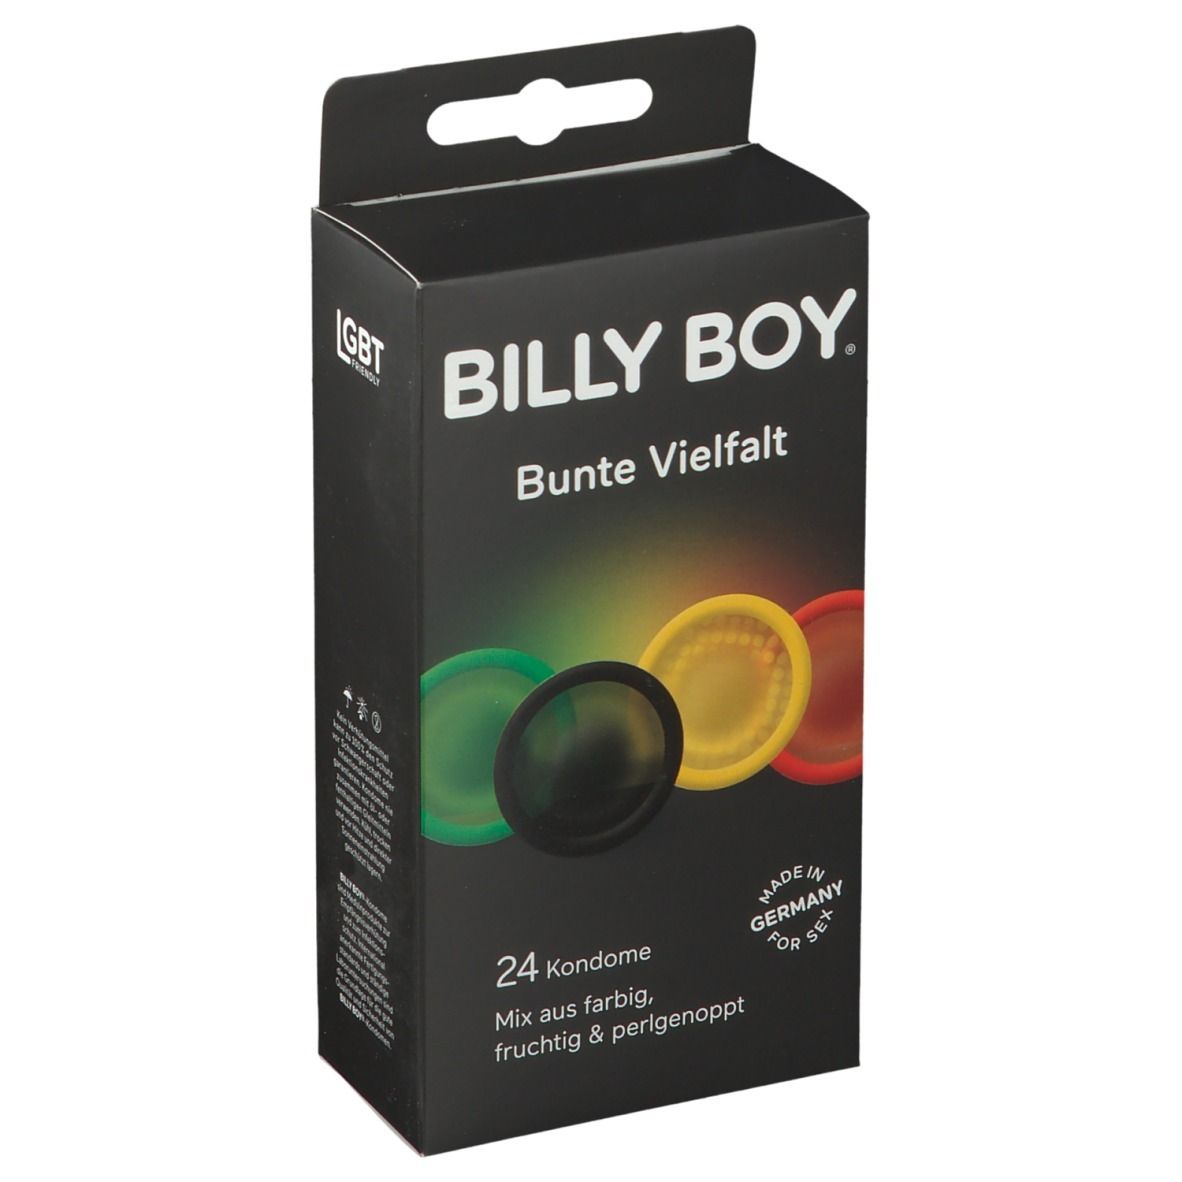 BILLY BOY Kondome Bunte Vielfalt